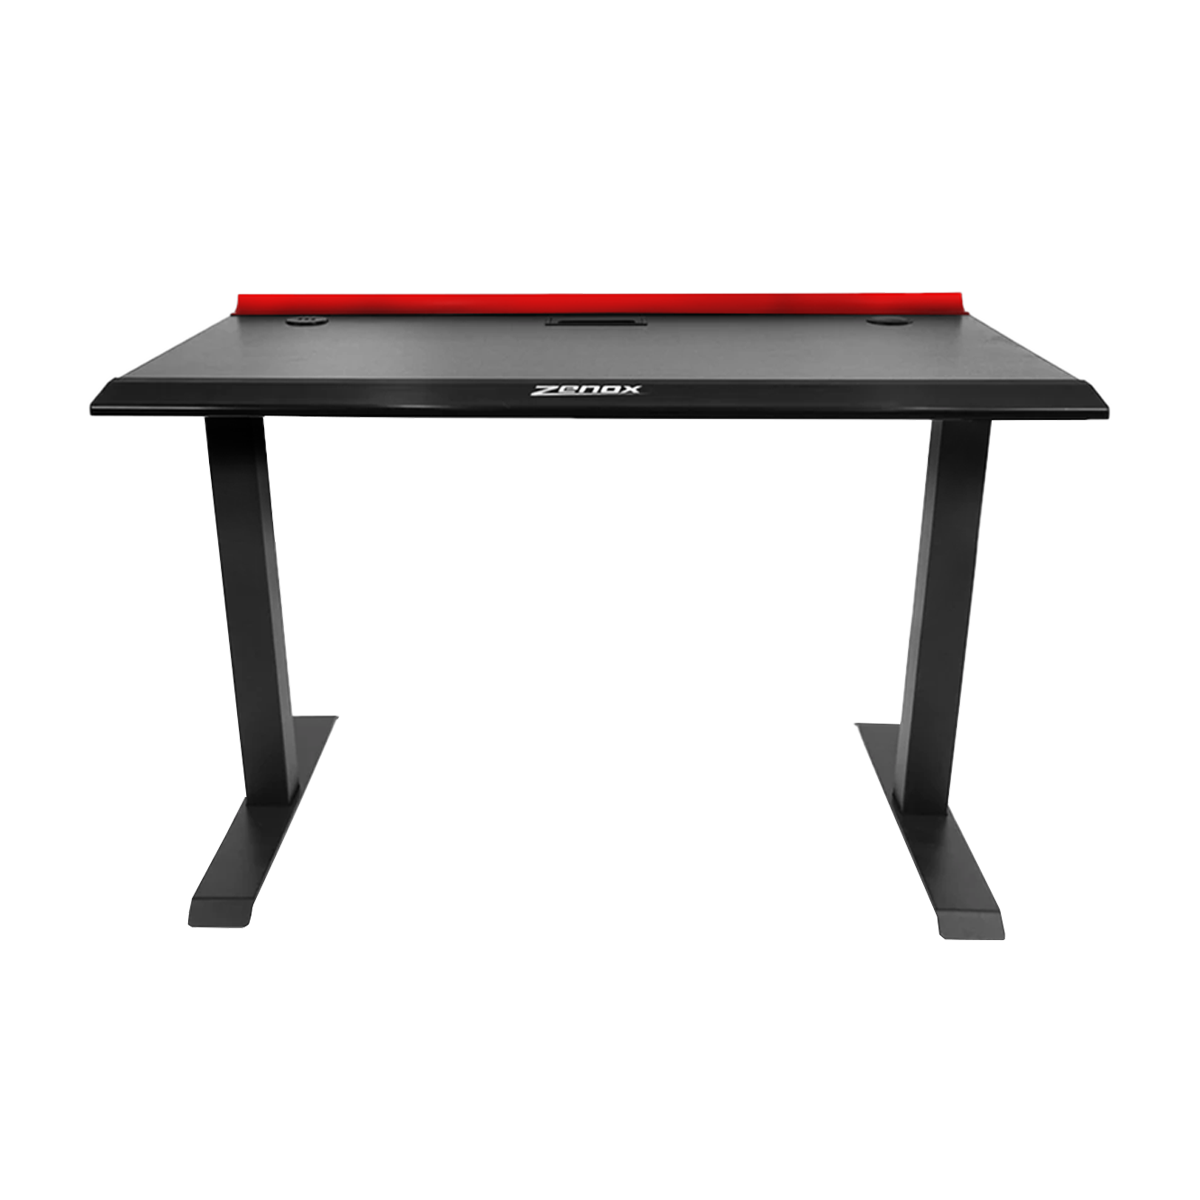 Zenox Artemis Gaming Desk 電競枱 (固定高度) - 1.2米 (Red 紅色)